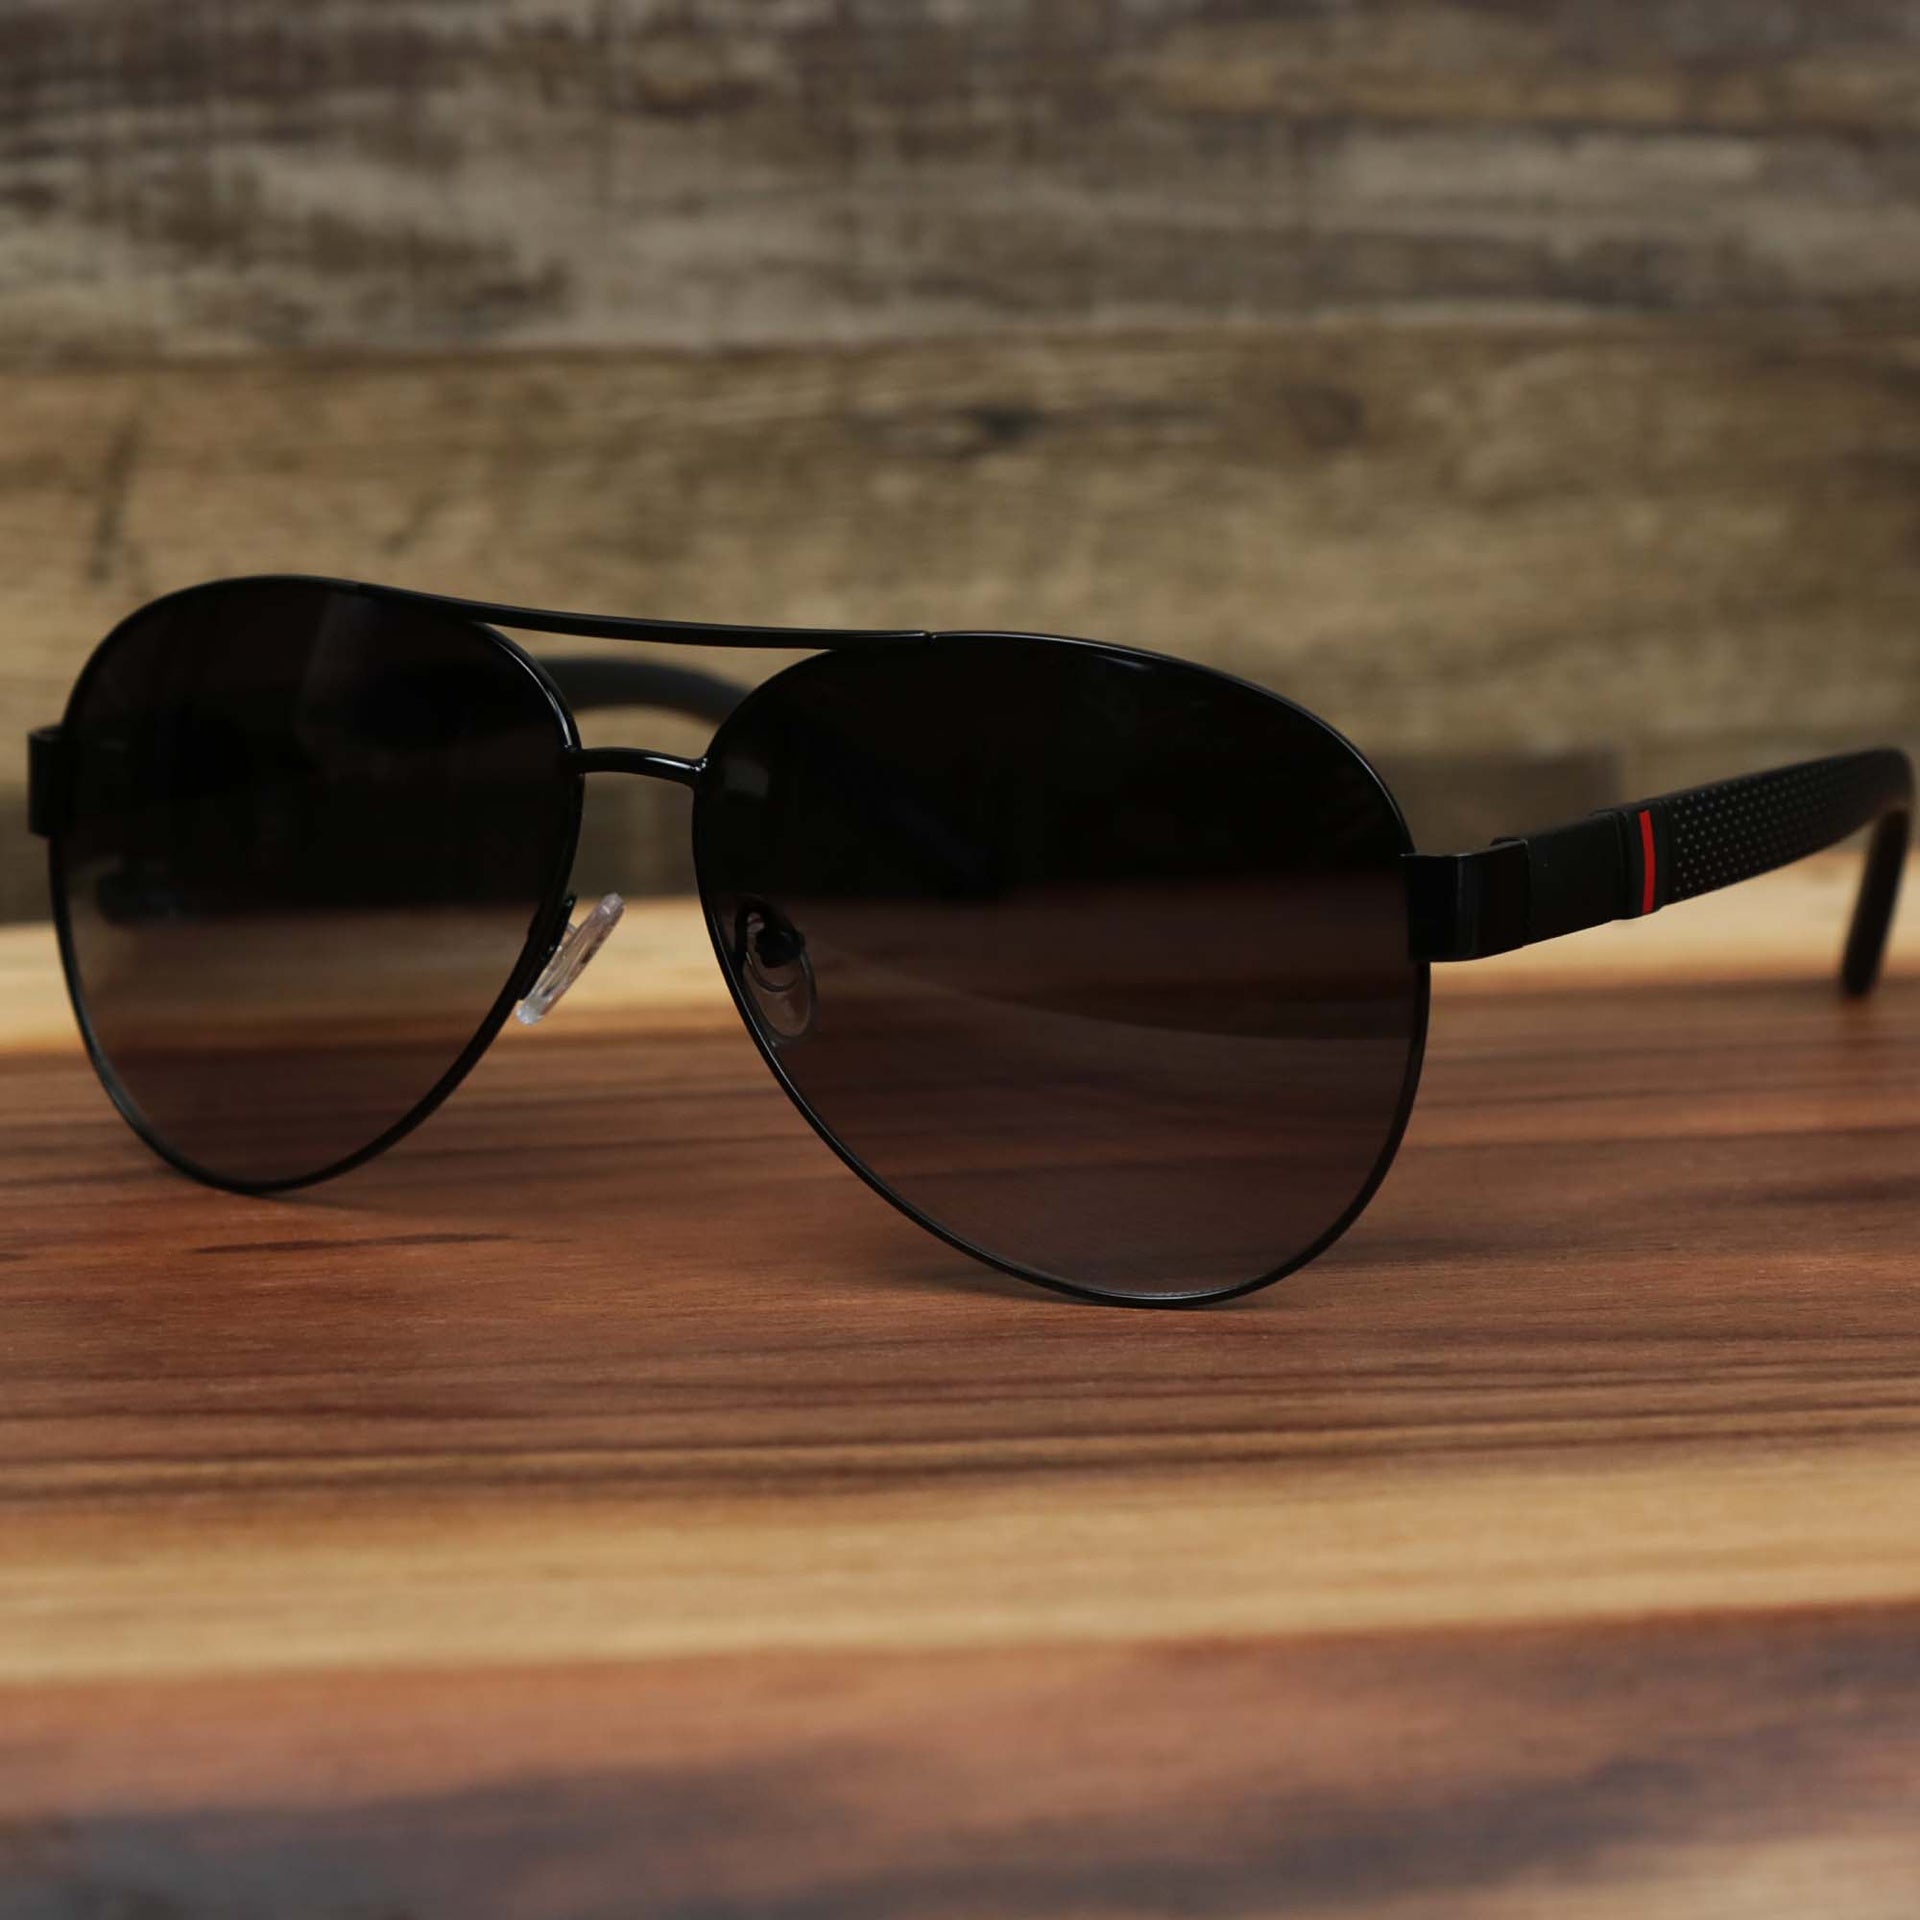 The Aviator Frame Racing Stripes Black Lens Sunglasses with Black Frame